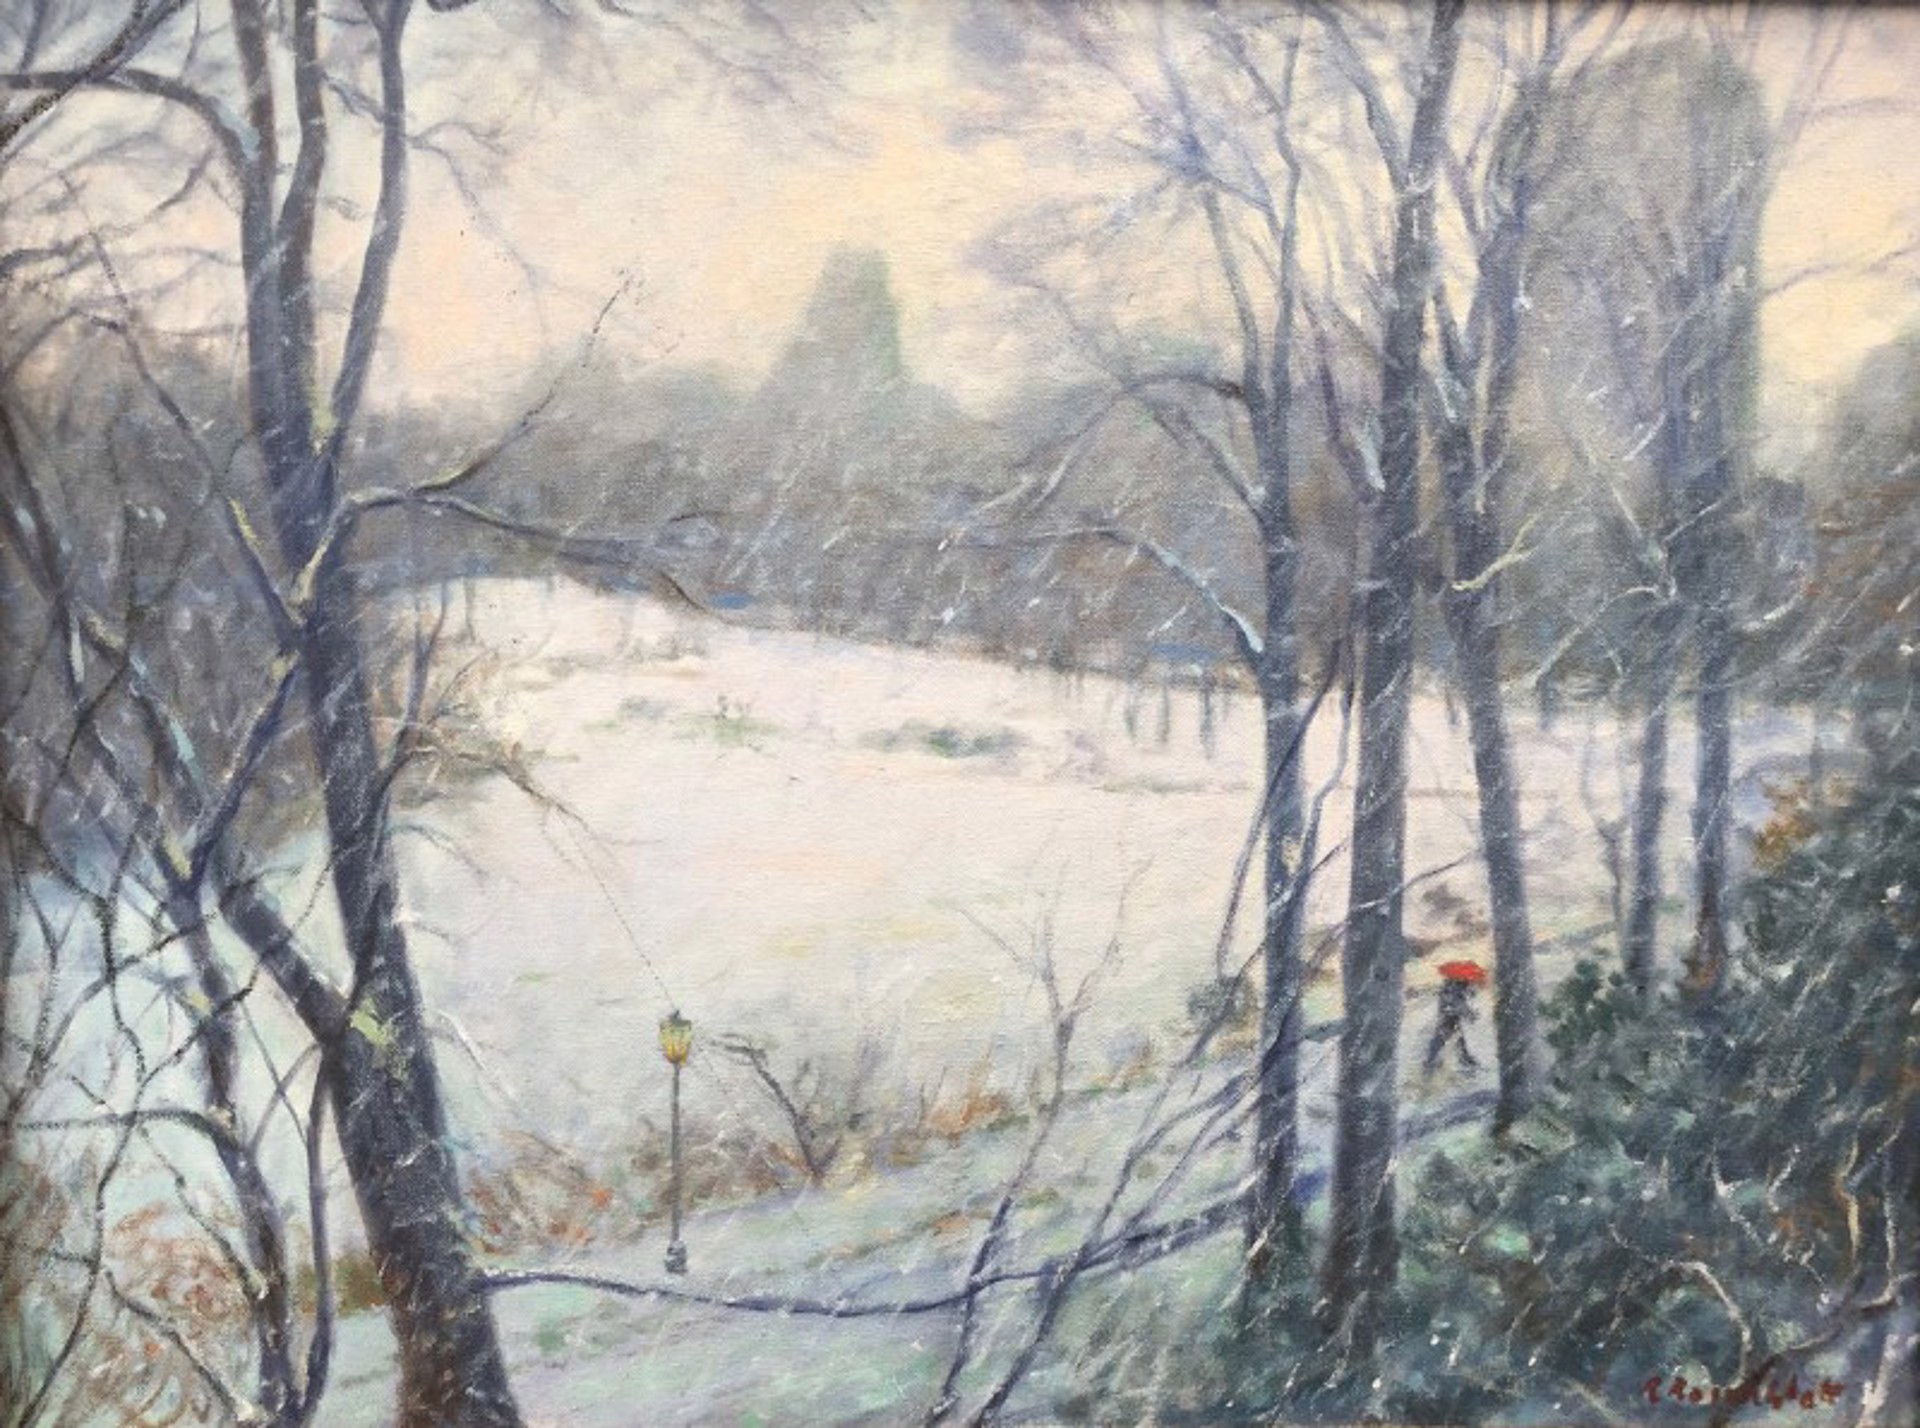 Deep in the Winter by Richard Rosenblatt